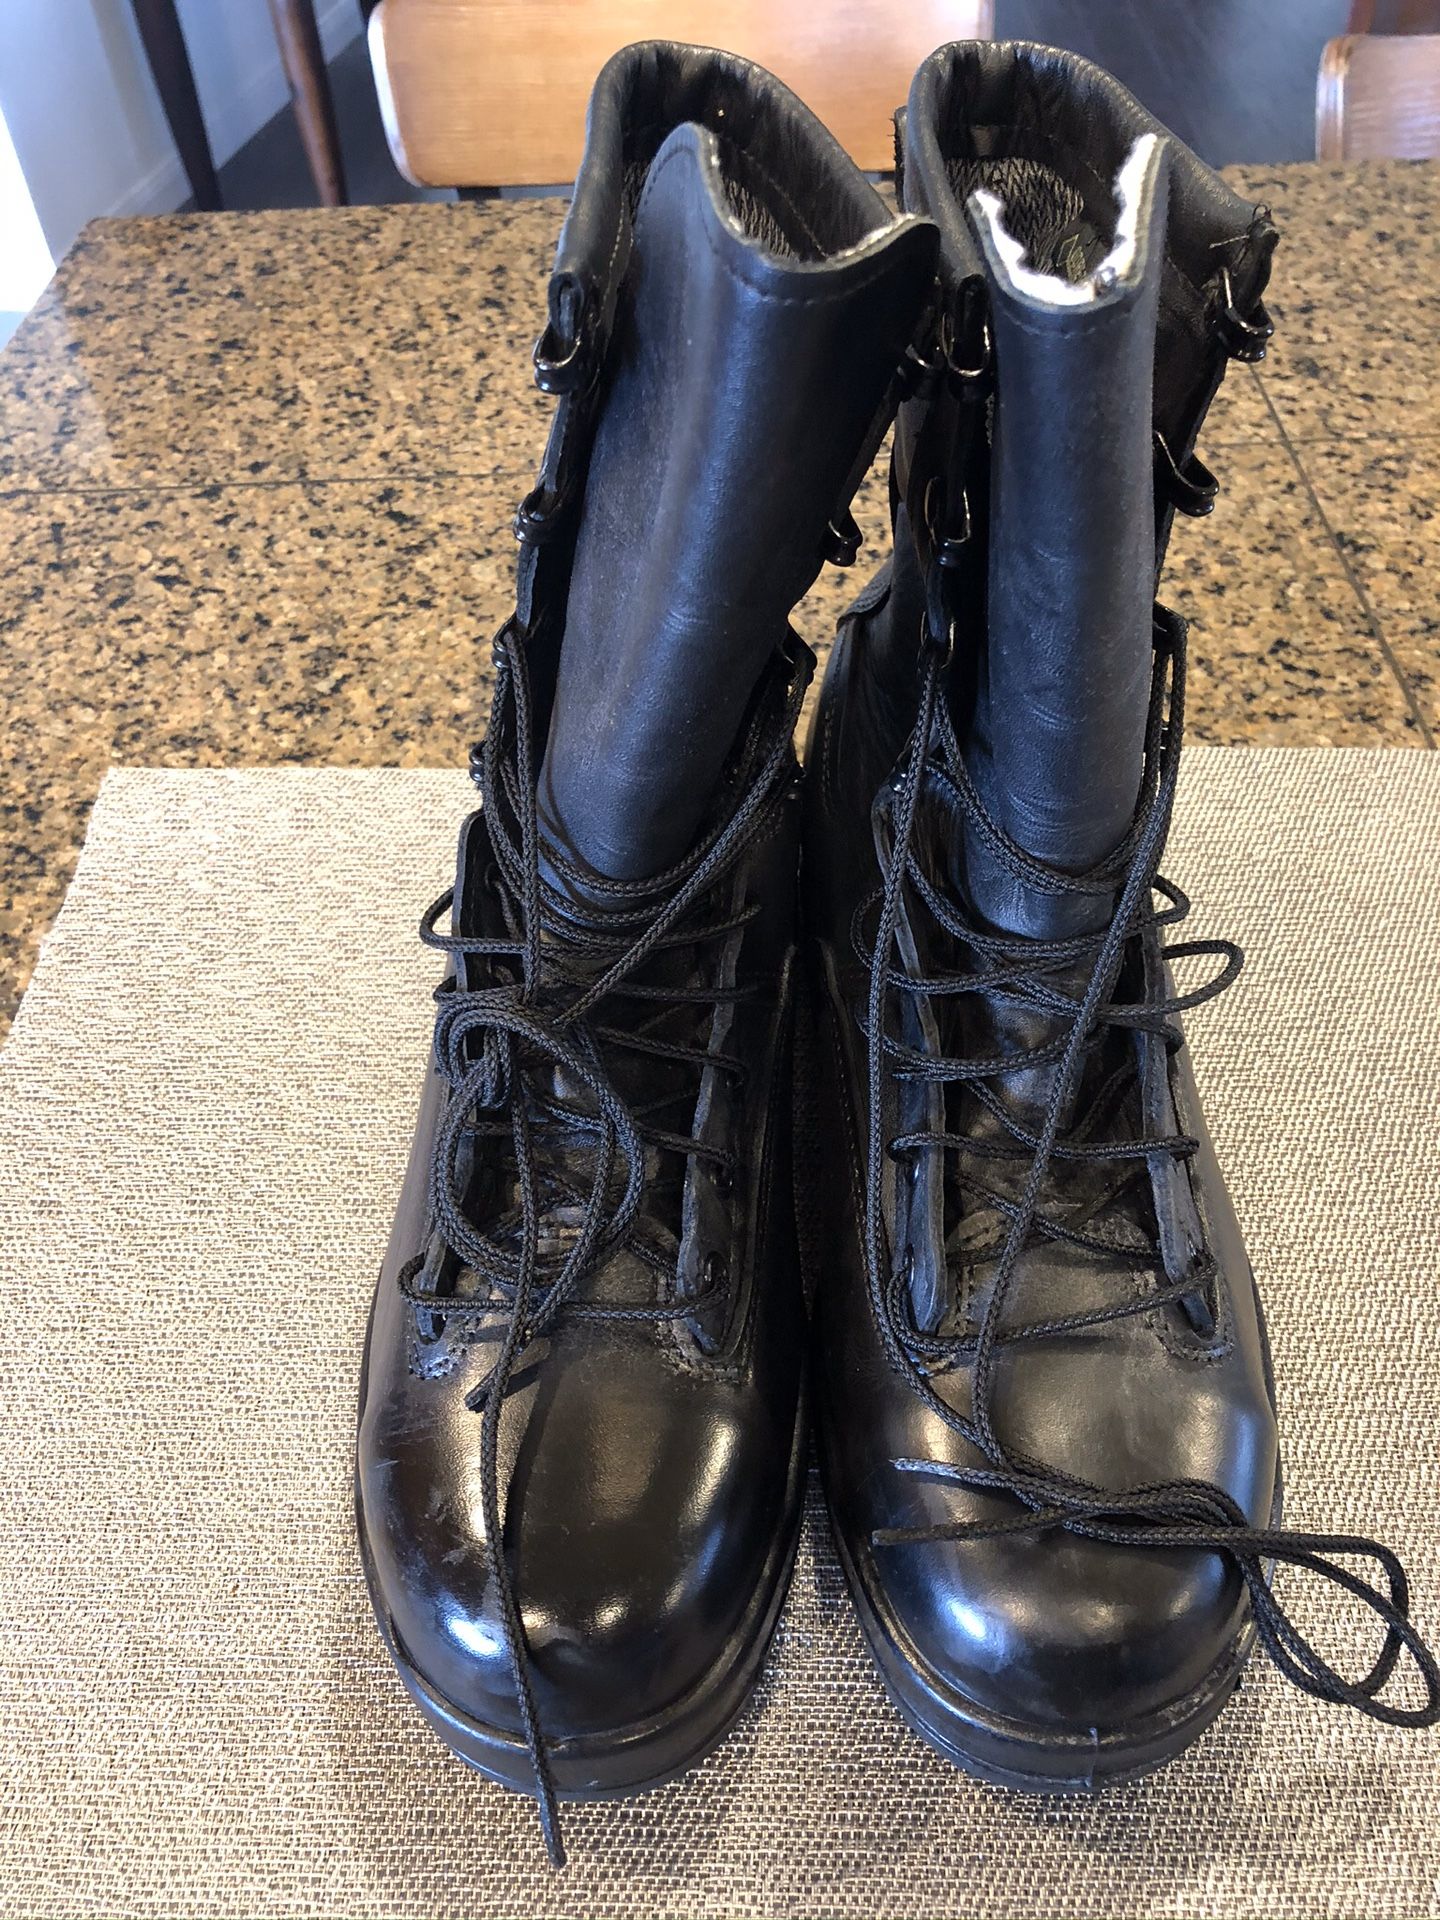 Belleville Waterproof Steel Toe Boot - 800ST. Size 9.5 Regular. Outstanding Condition. See photos.